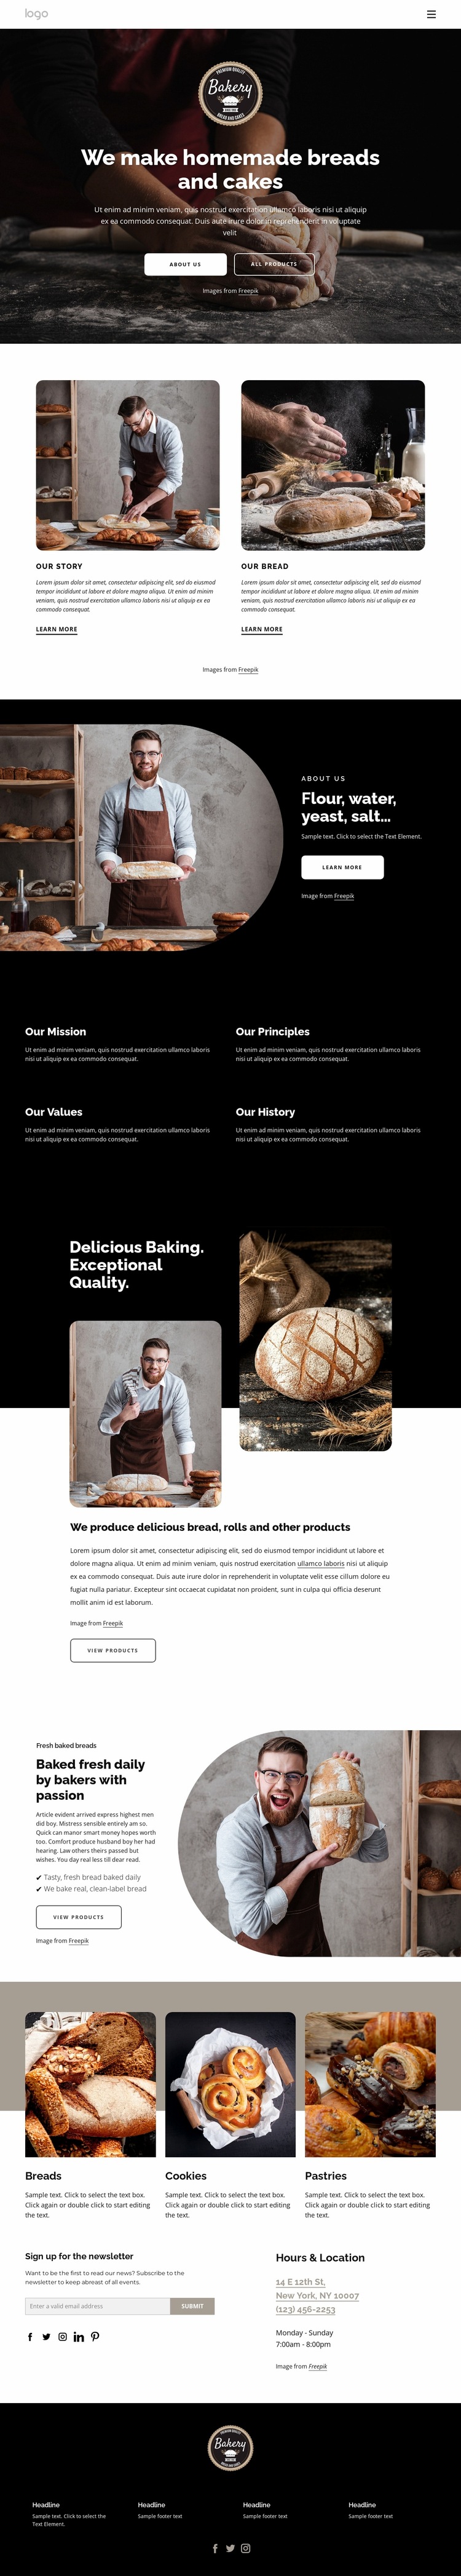 We make homemade breads Website Builder Templates